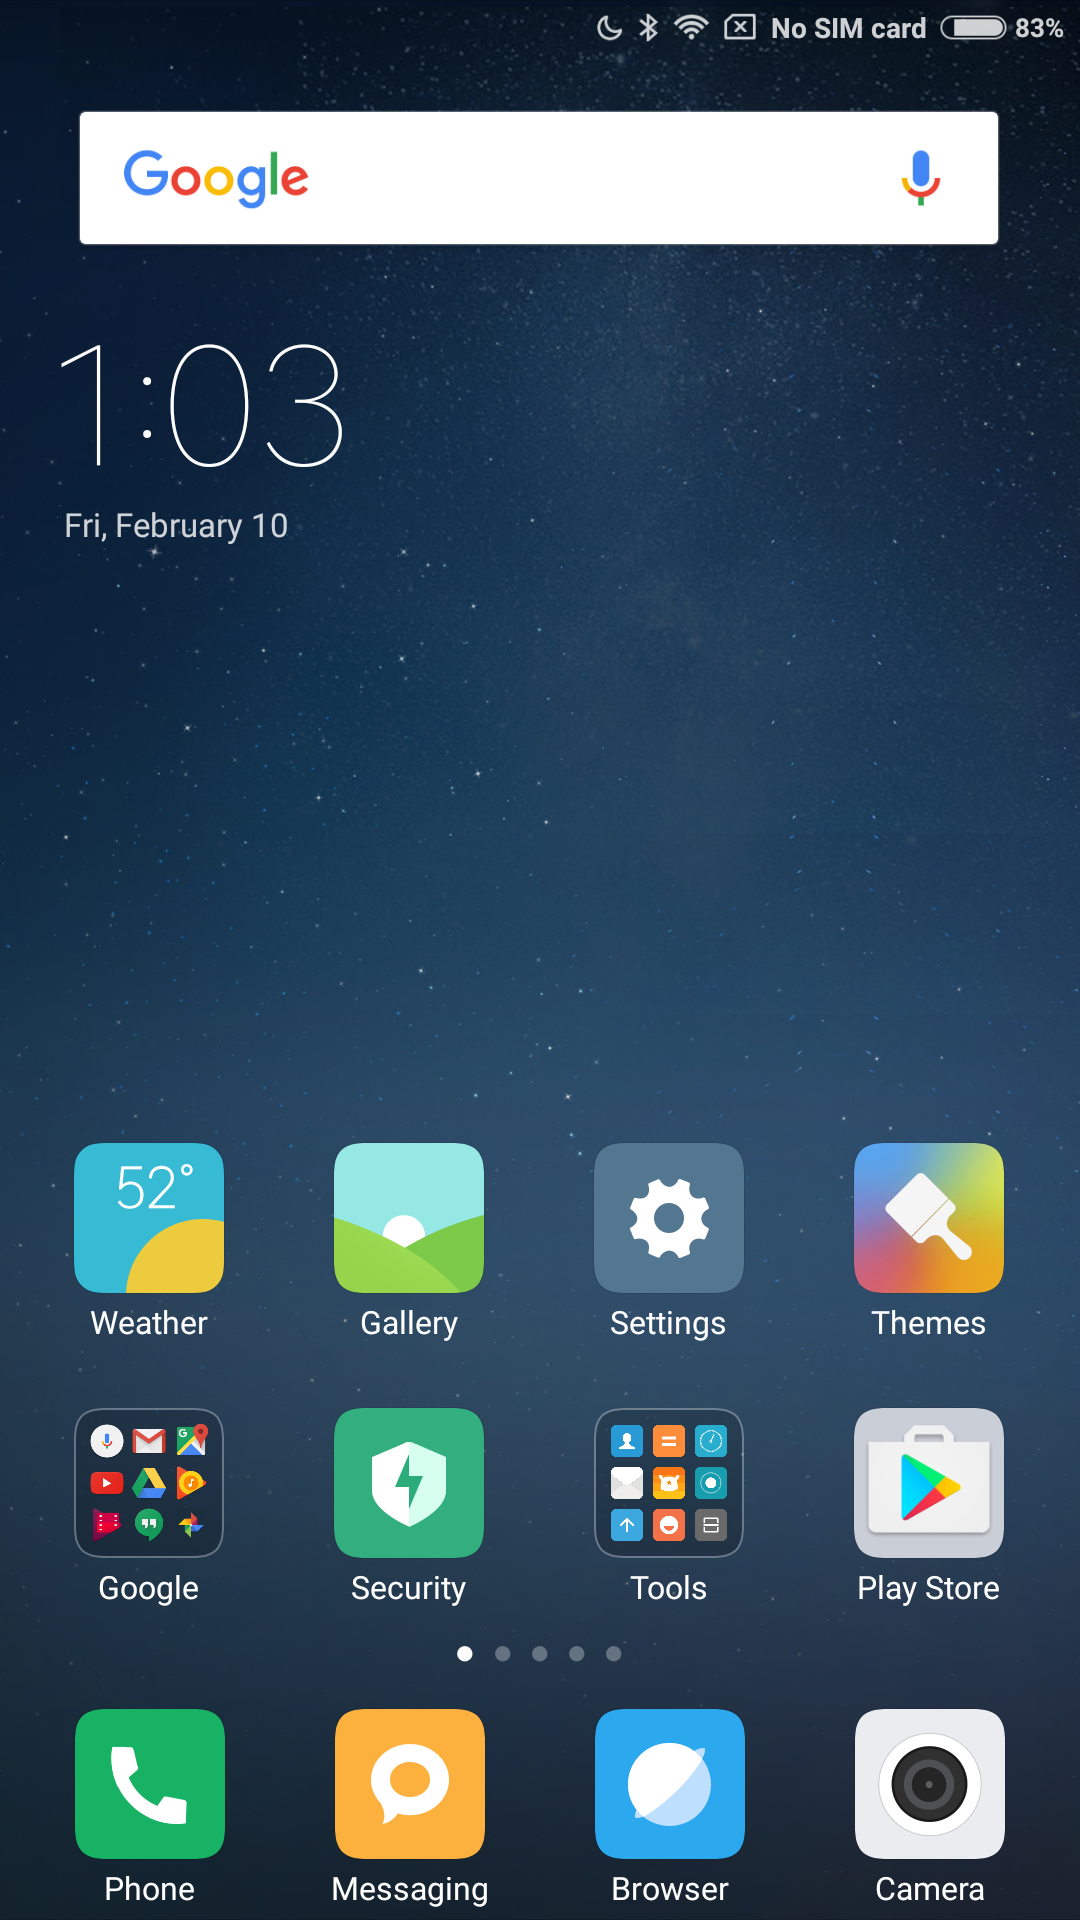 Xiaomi Mi Note 2 -  External Reviews